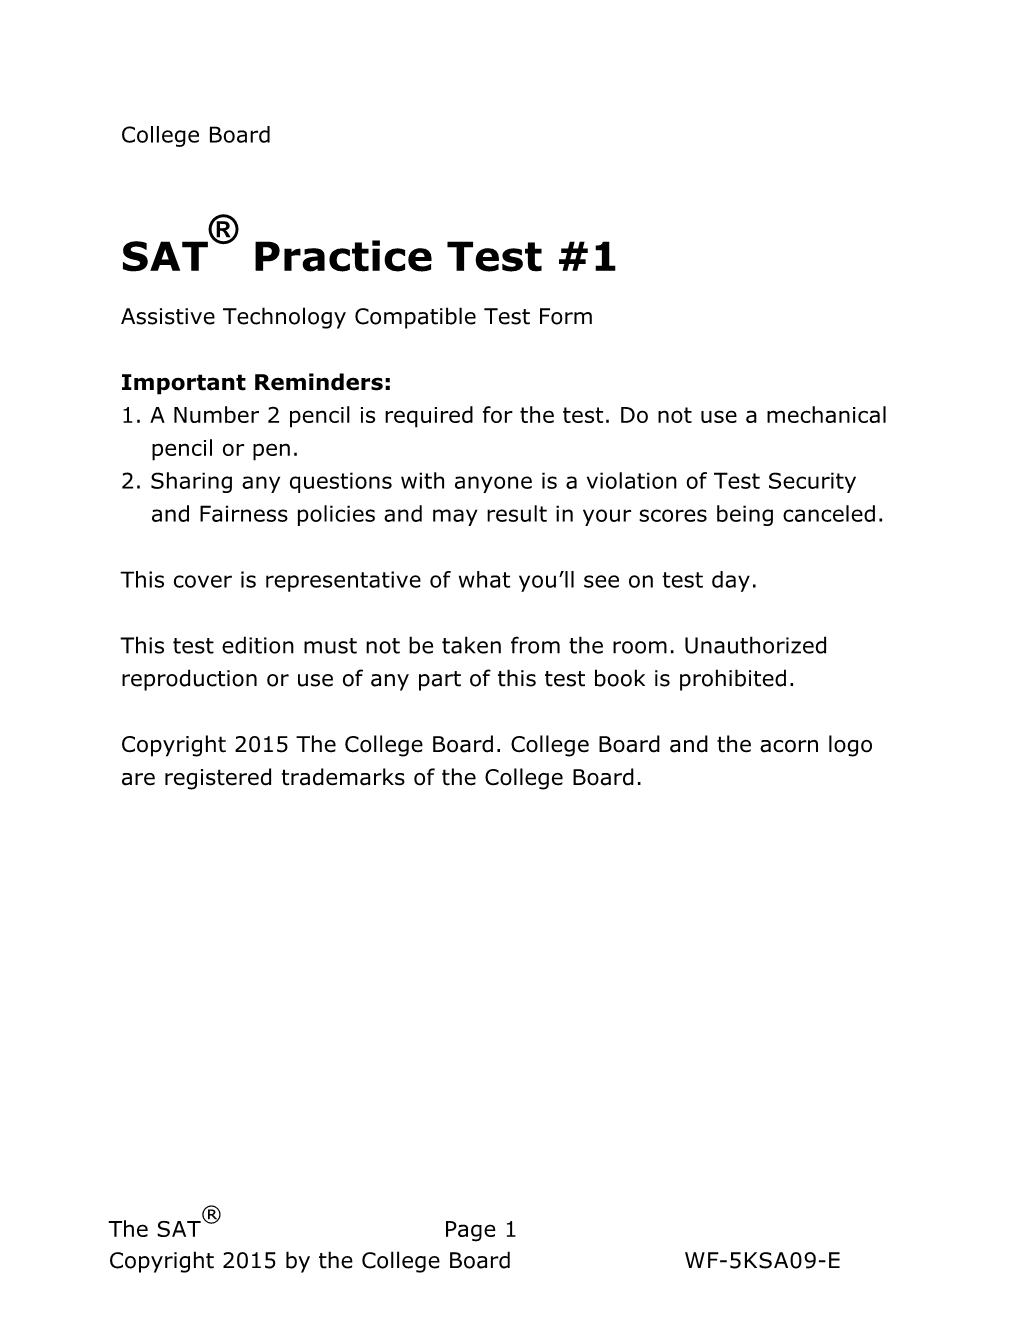 SAT Practice Test #1